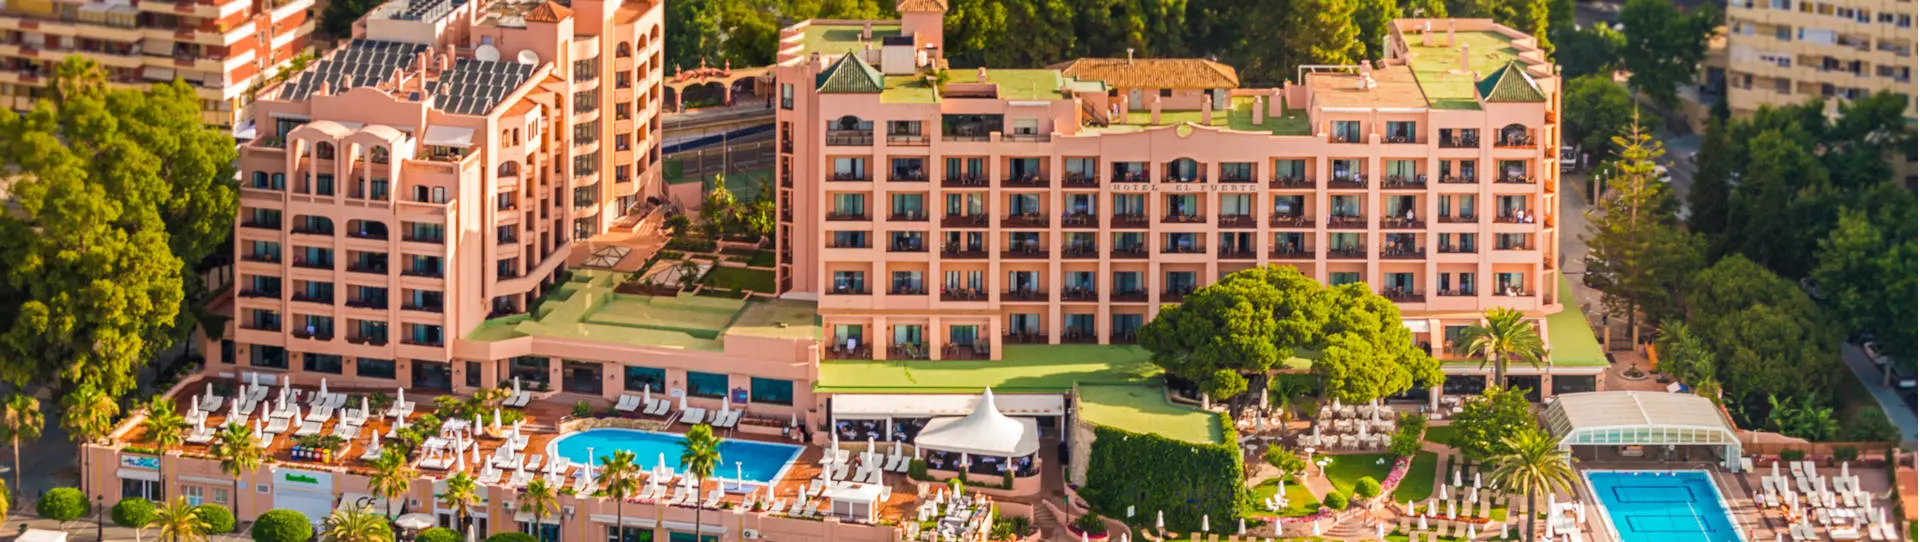 Spain golf holidays - El Fuerte Marbella Hotel - Photo 1